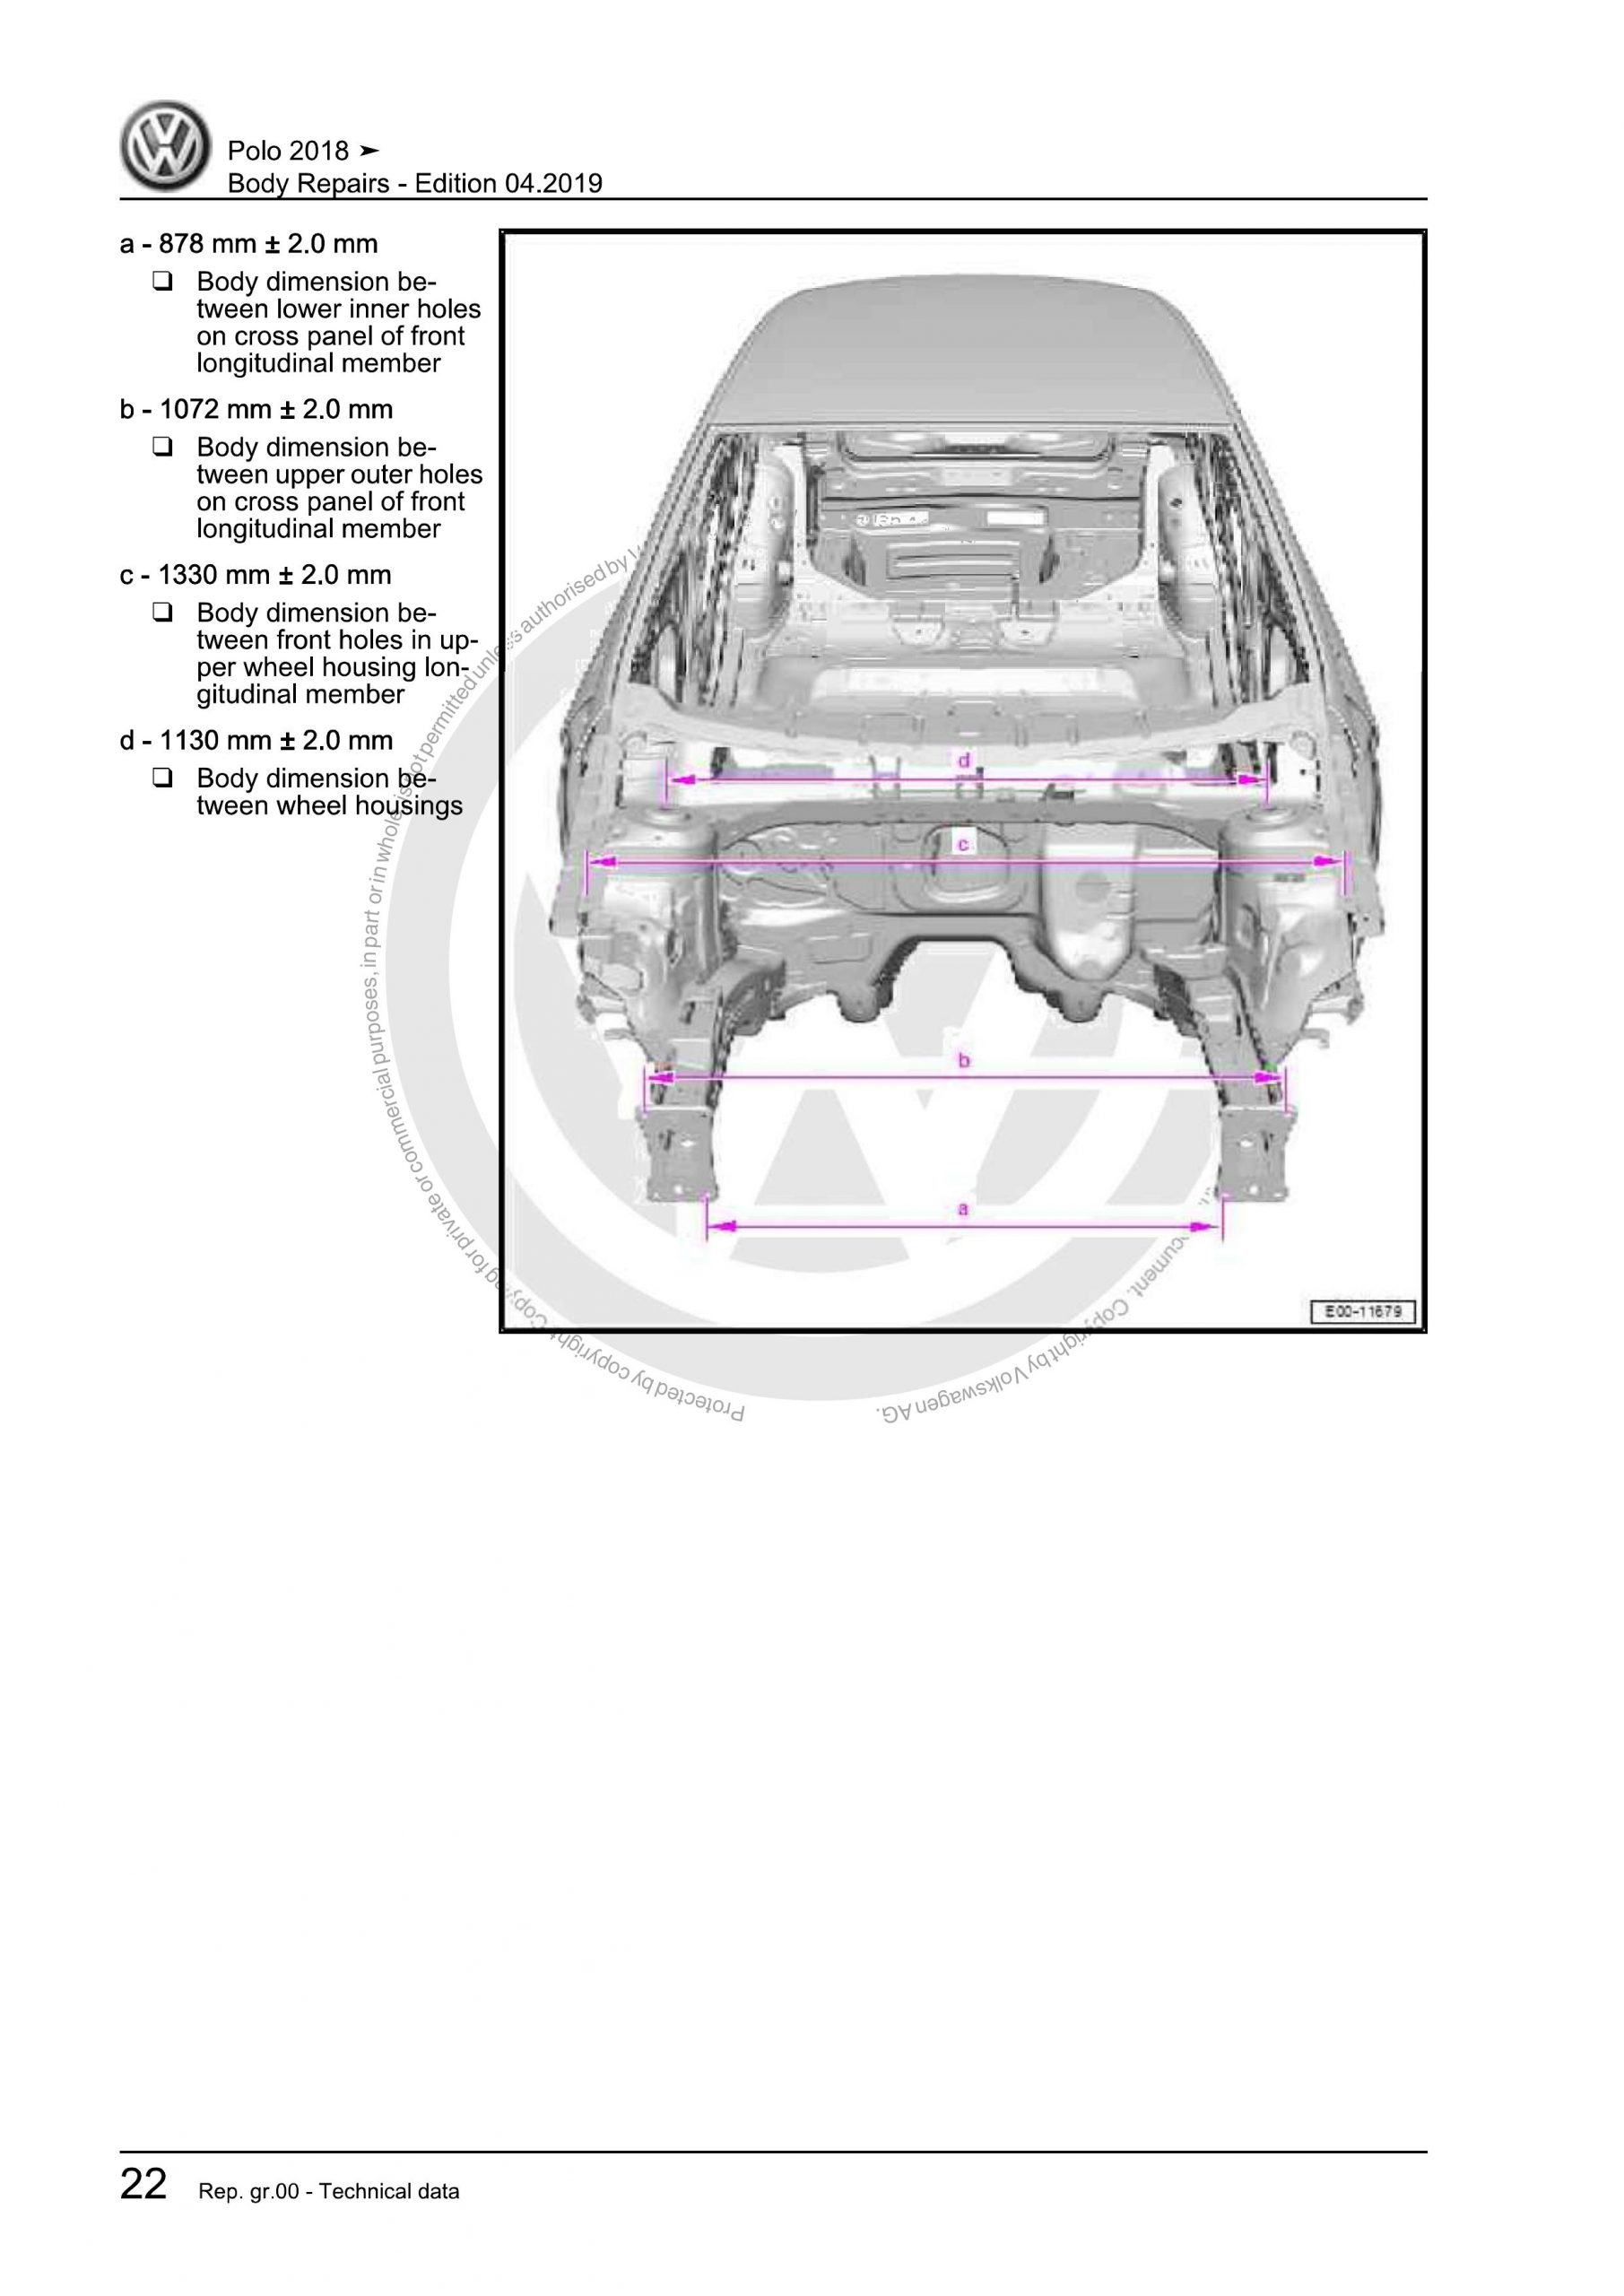 VW Polo (AW-BZ) Body Repairs OEM Workshop Manual